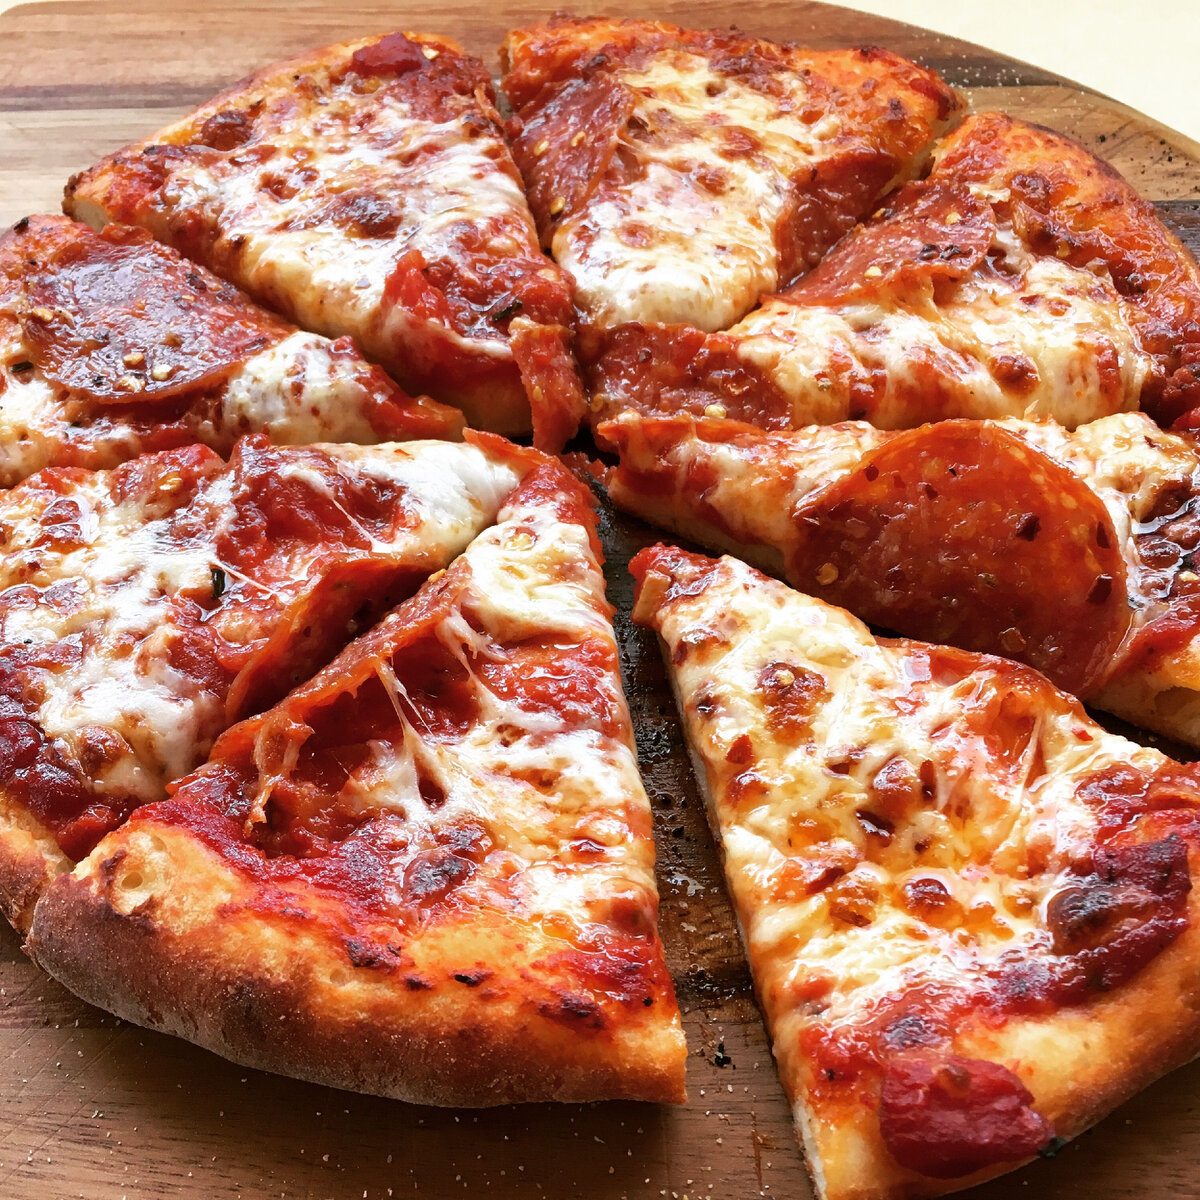 я хочу пиццу с перцем луком пепперони фото 73